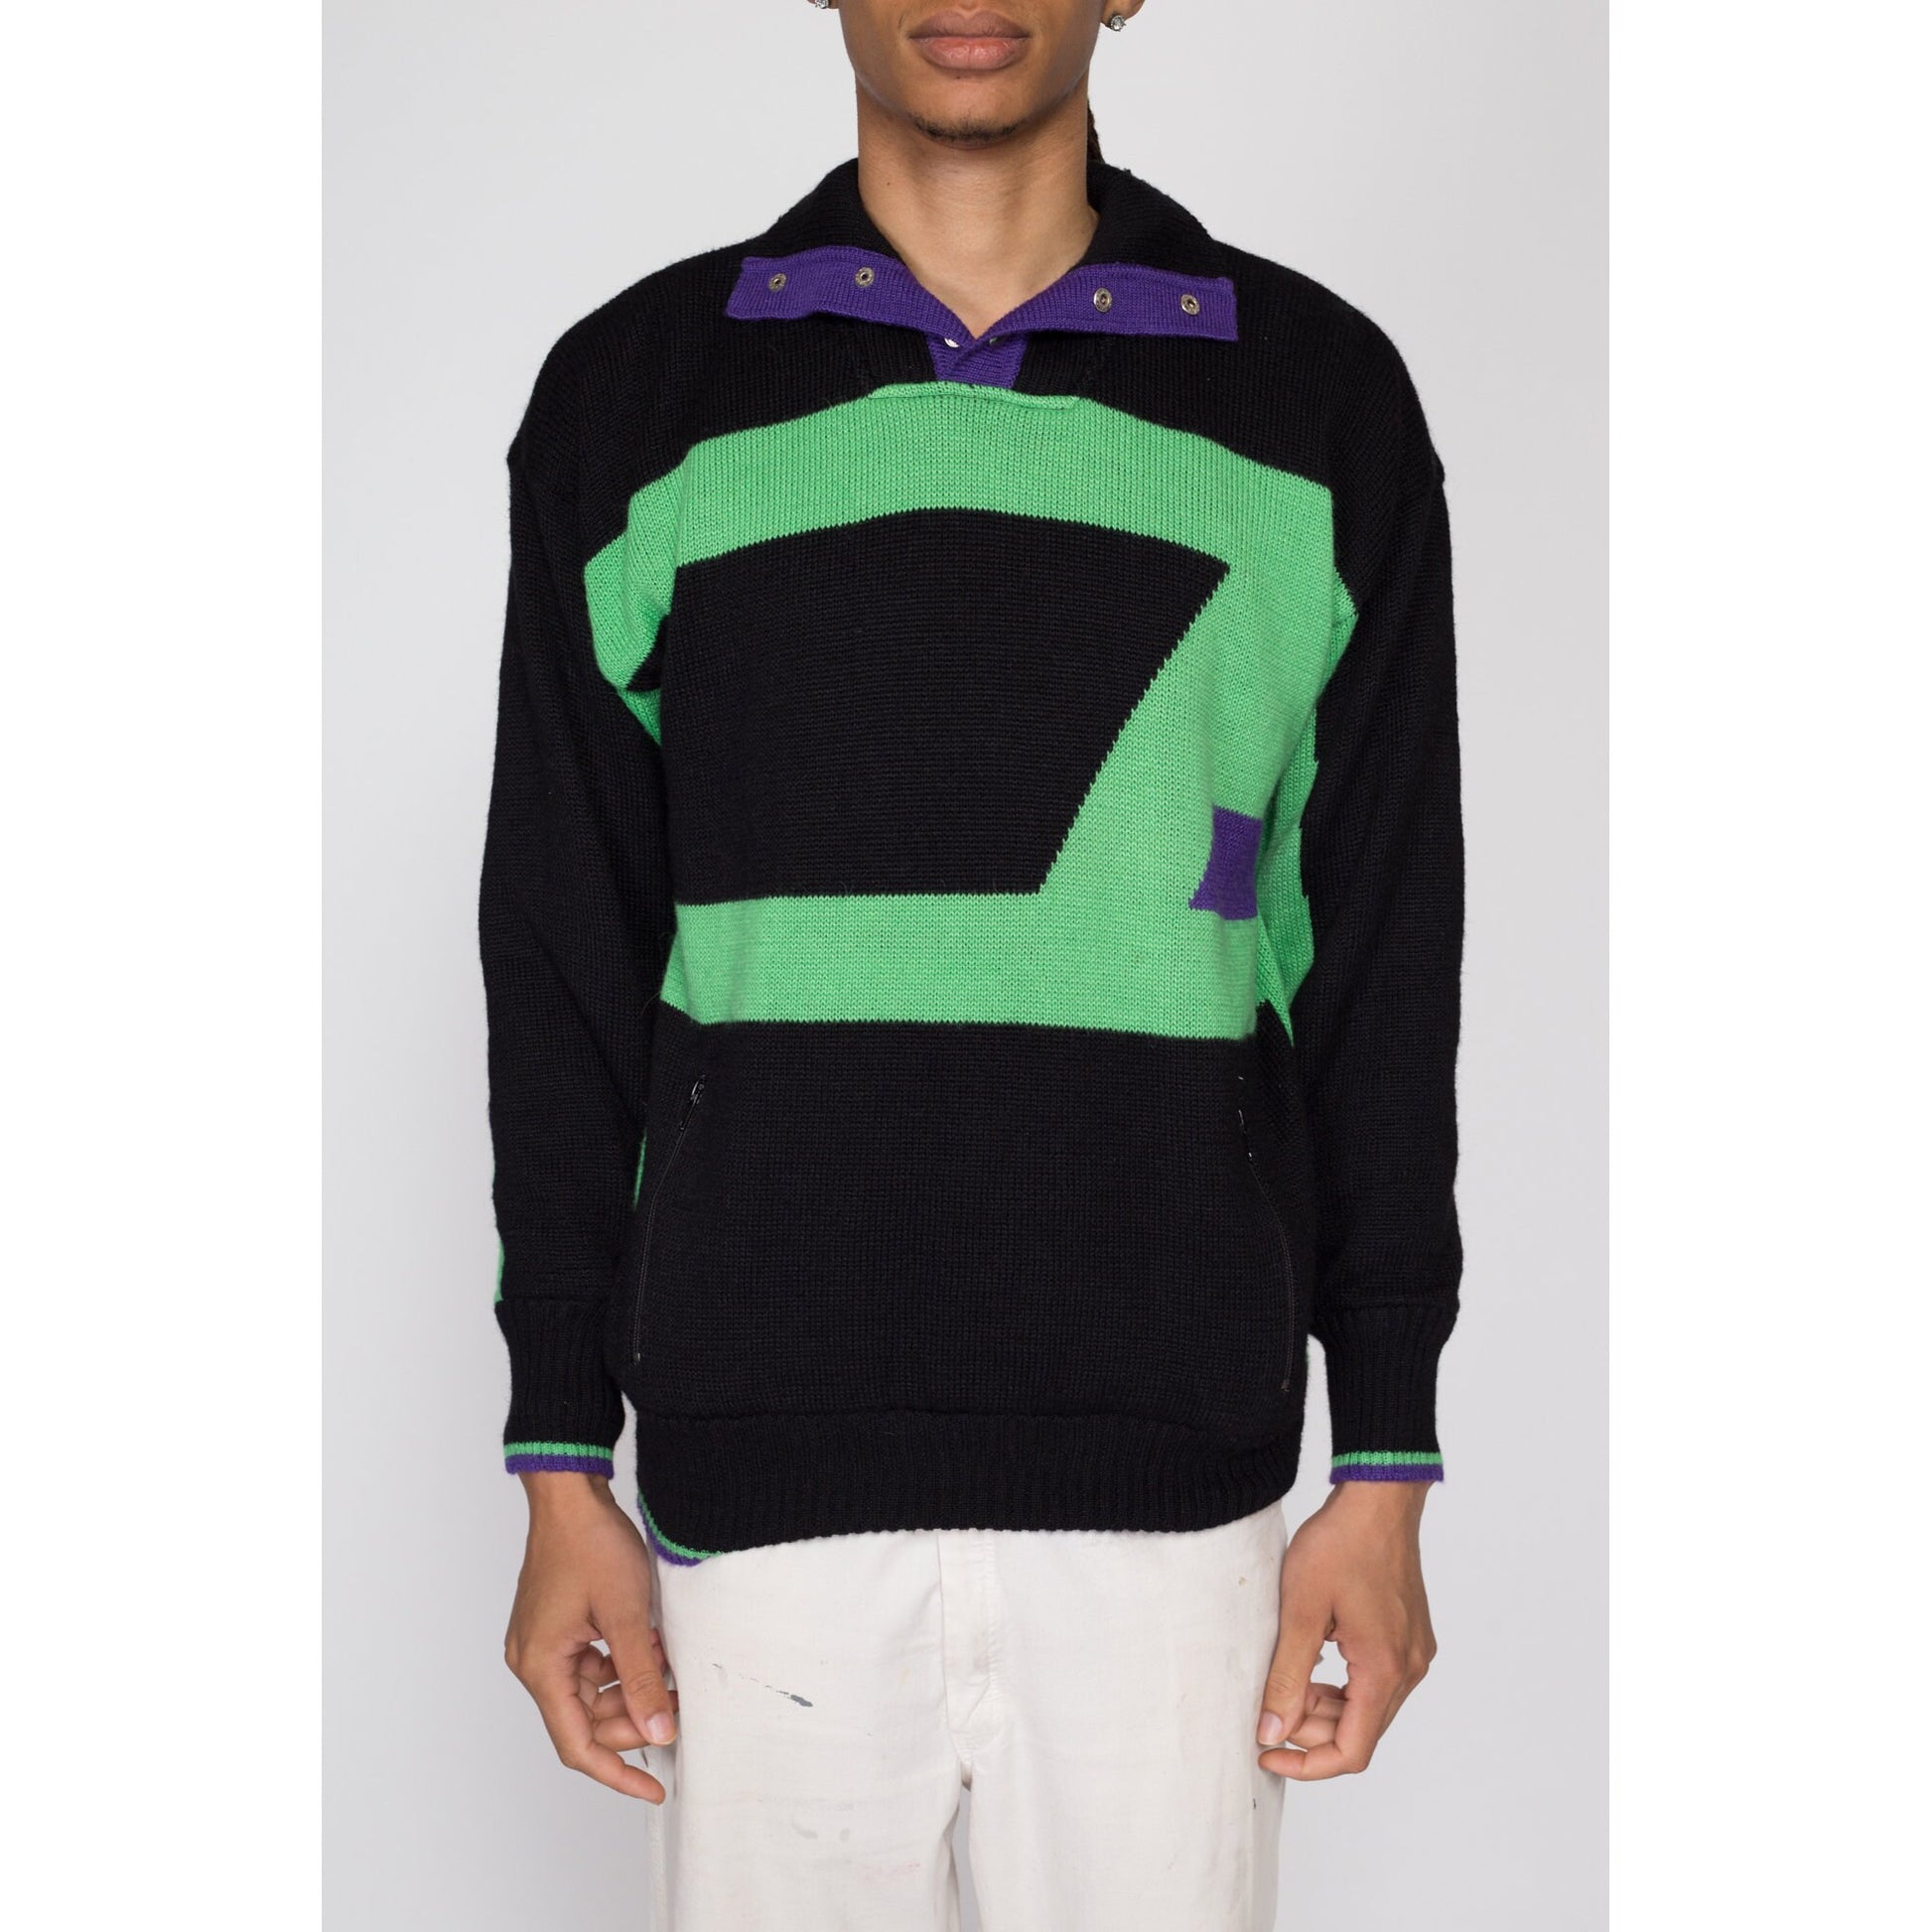 Medium 80s Black & Green Color Block White Stag Ski Sweater | Vintage Lined Knit Pullover Jumper